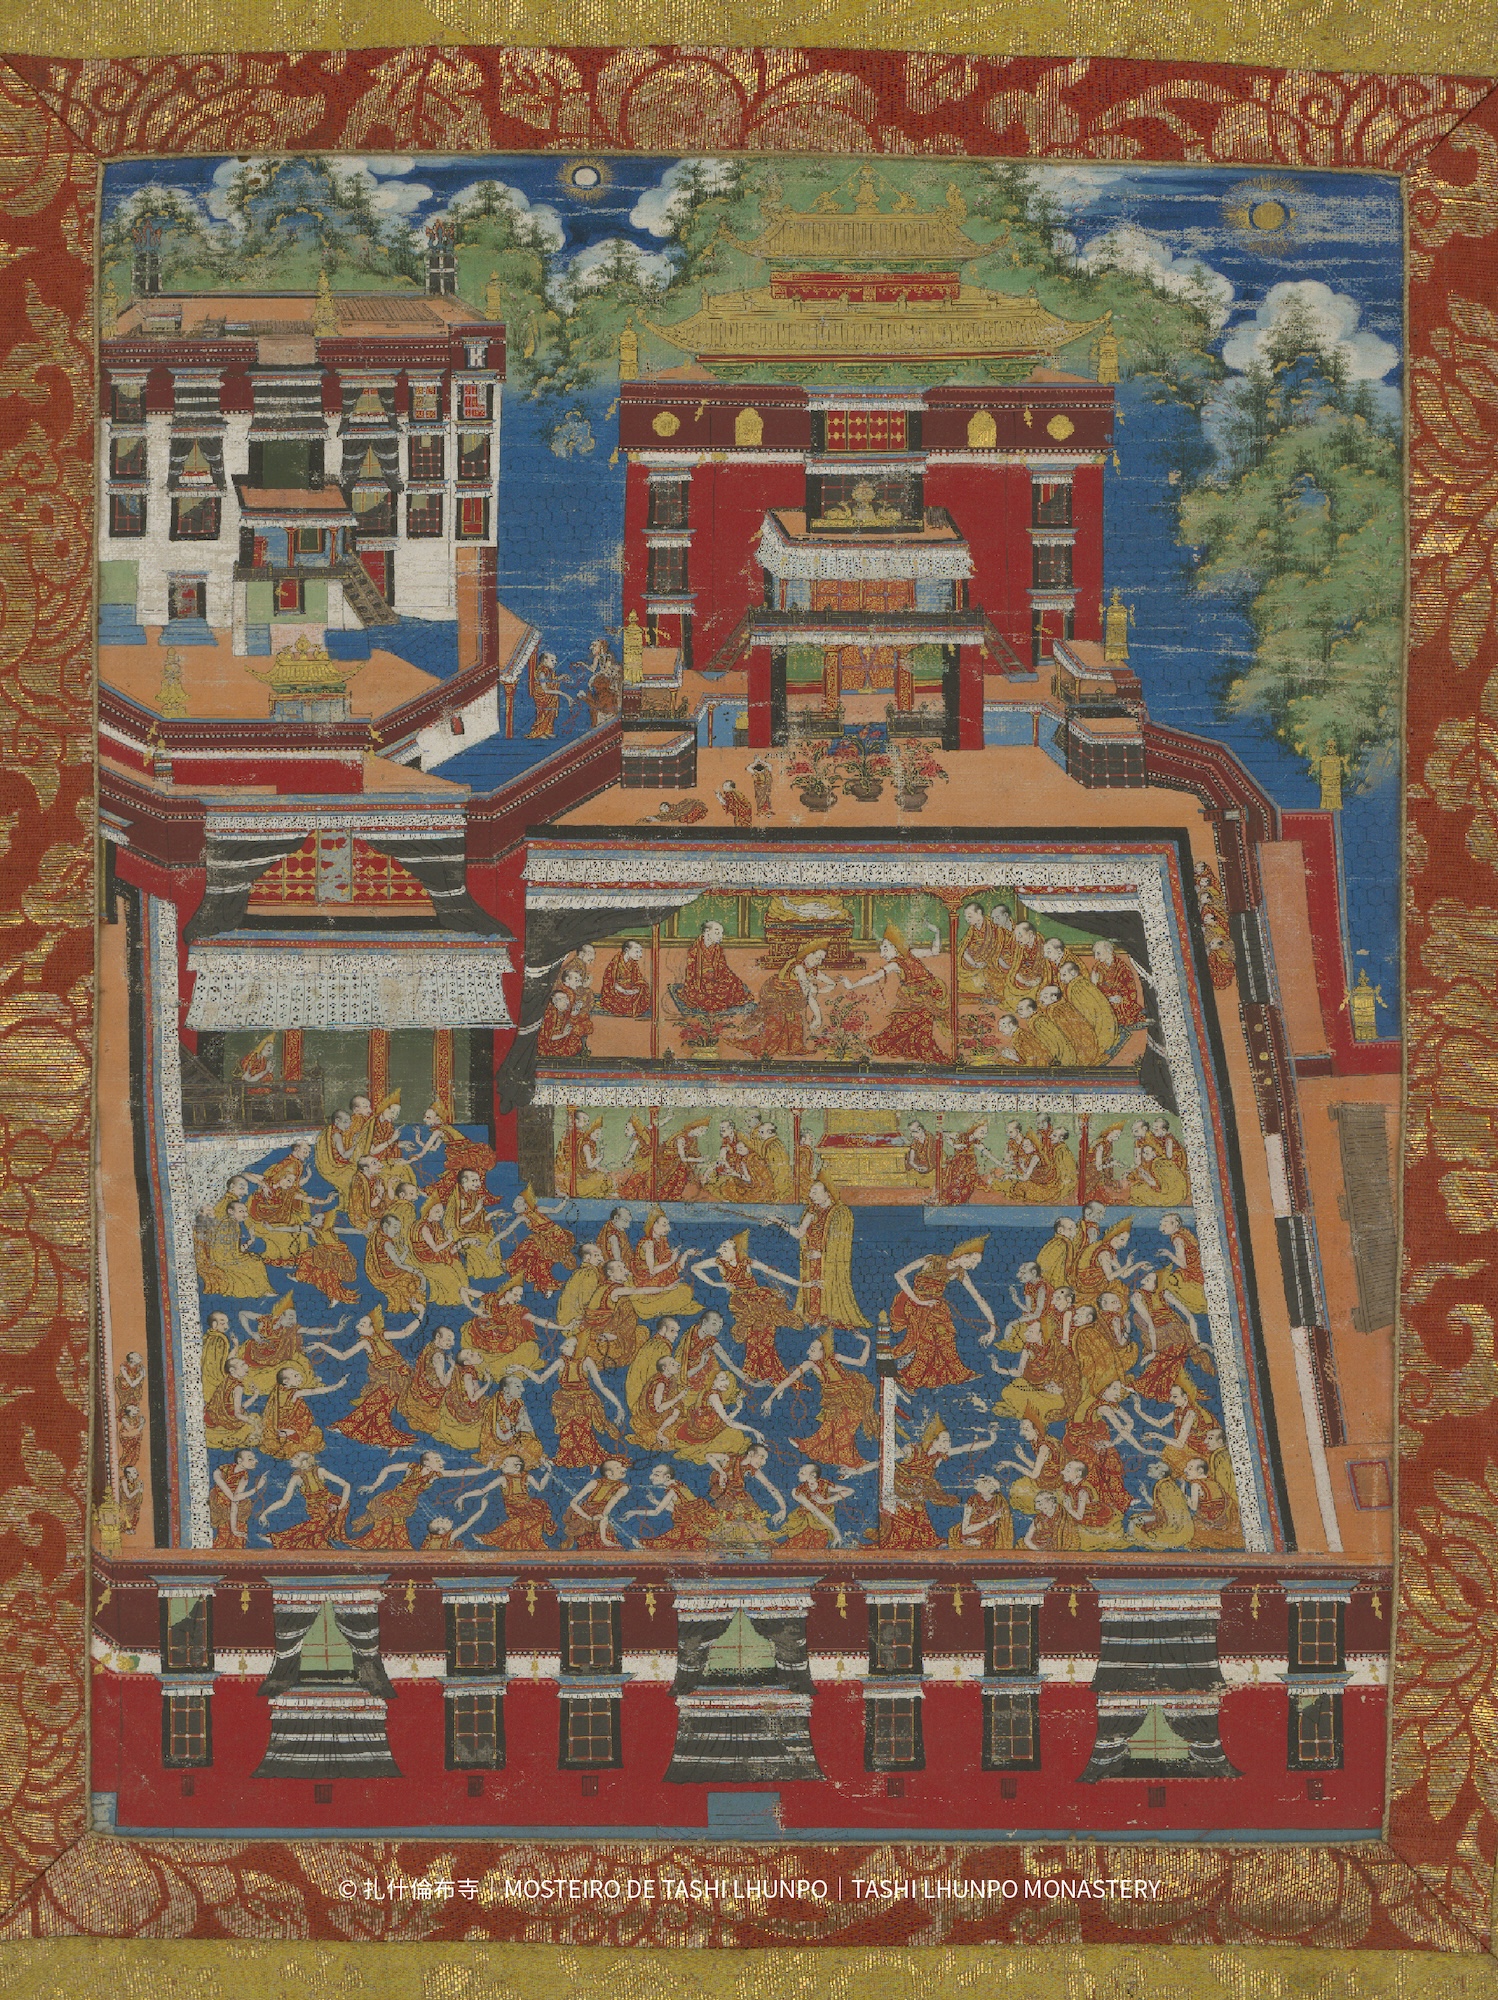 Tashi Lhunpo Monastery under the fifth Panchen Lama (17-18th century)